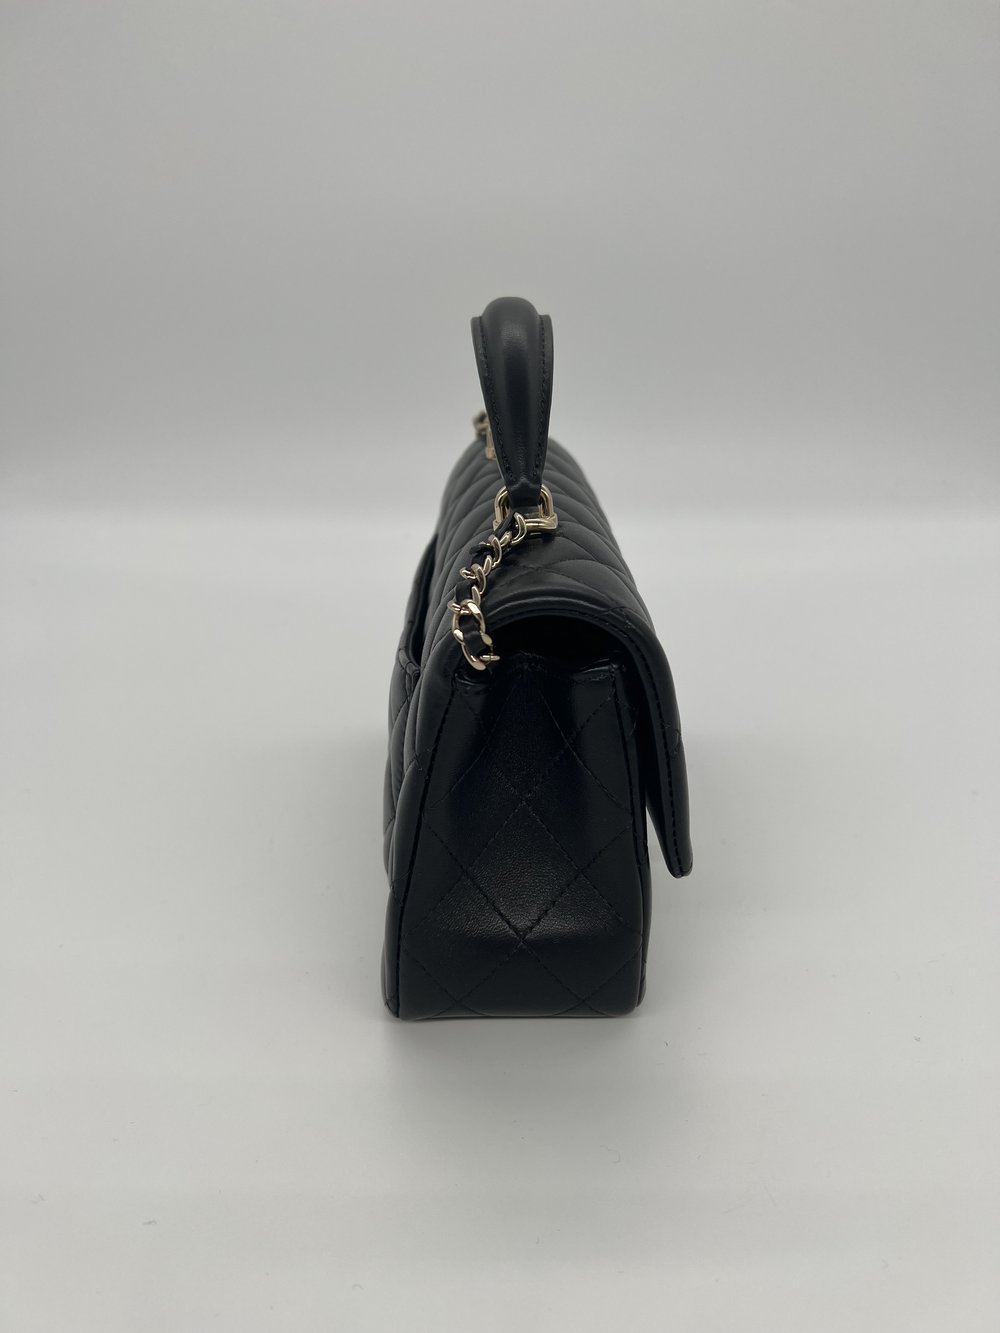 Chanel Mini Top Handle - Black GHW - SOLD